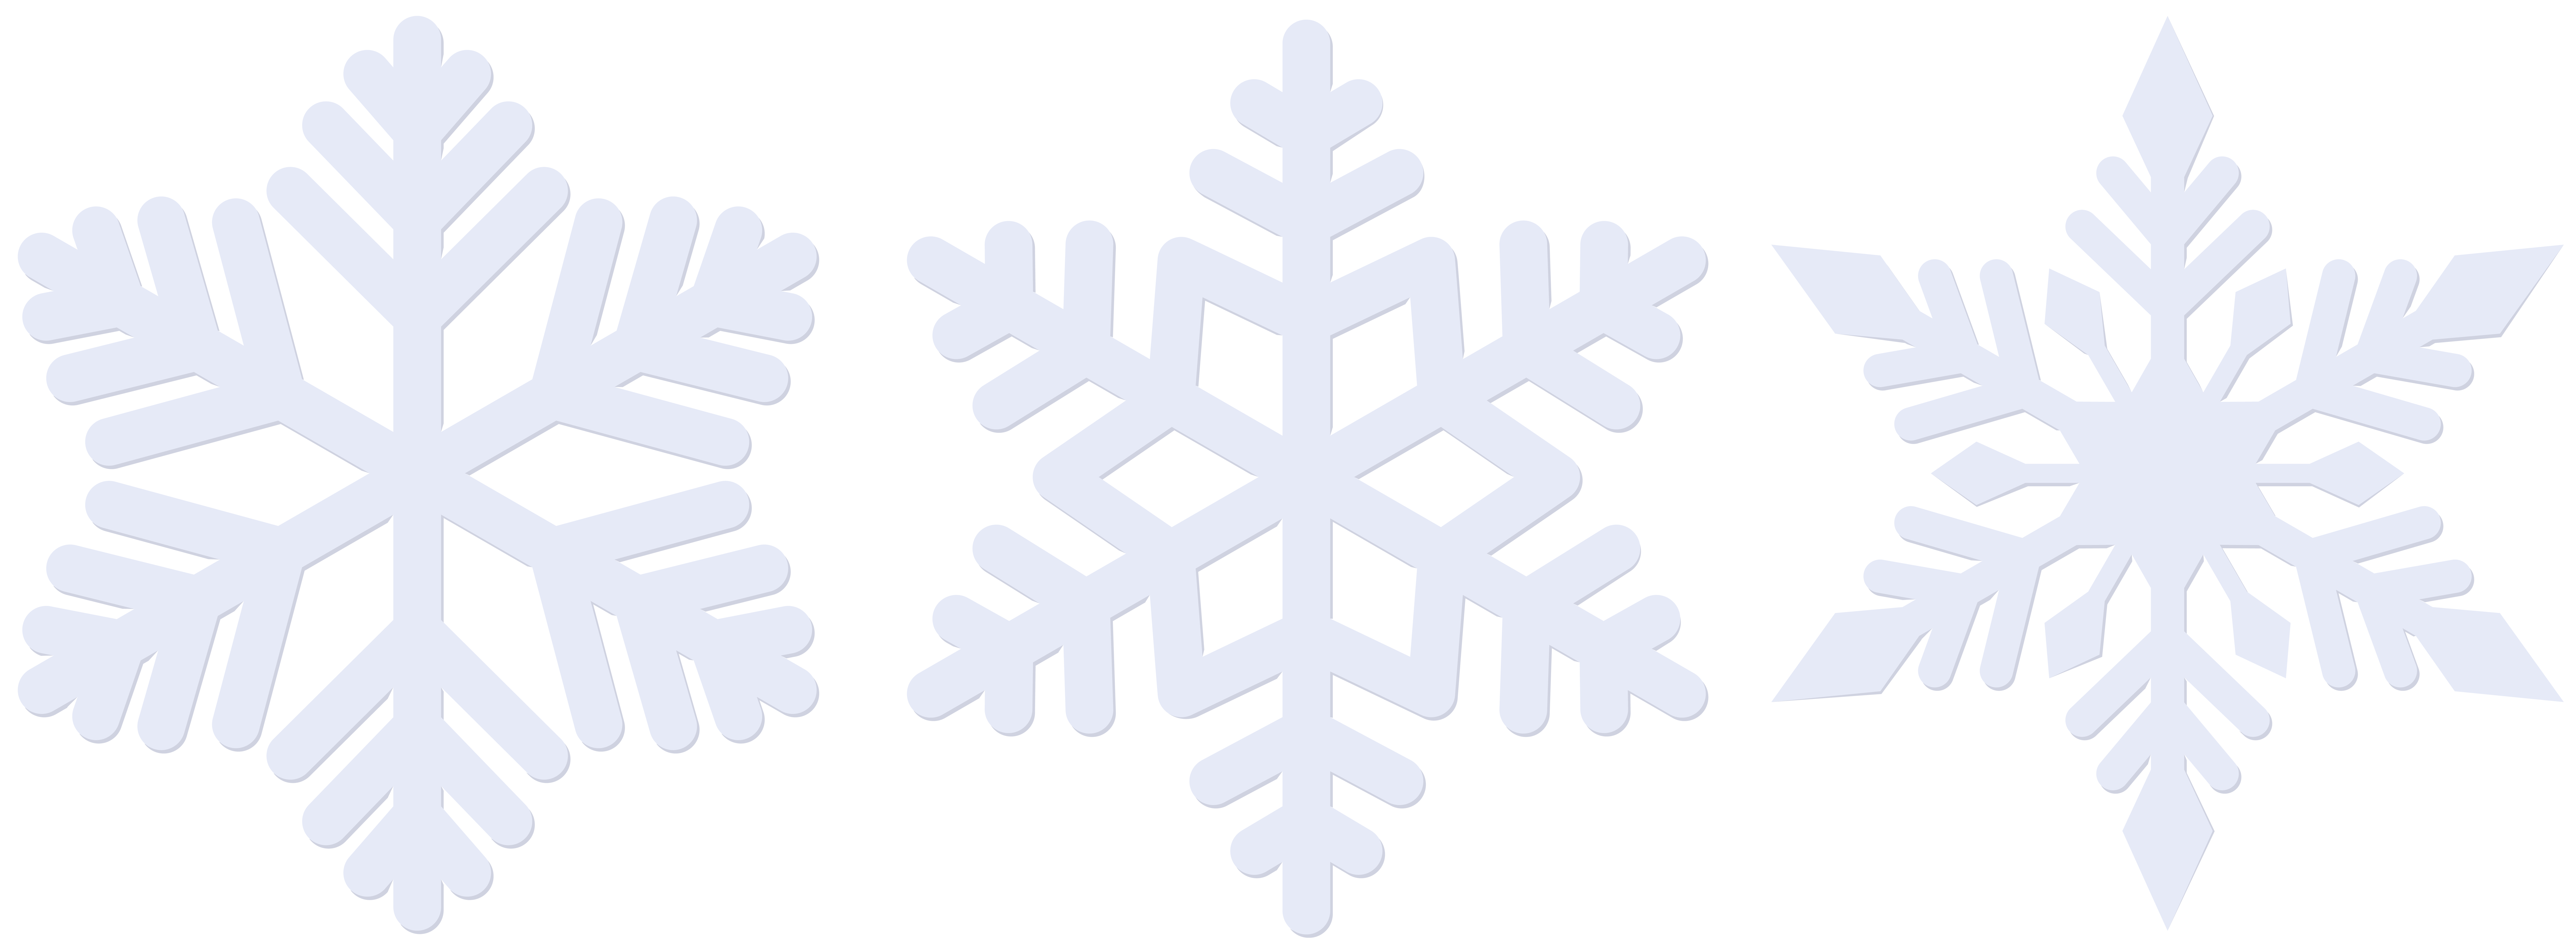 Snowflakes PNG Clip Art Image